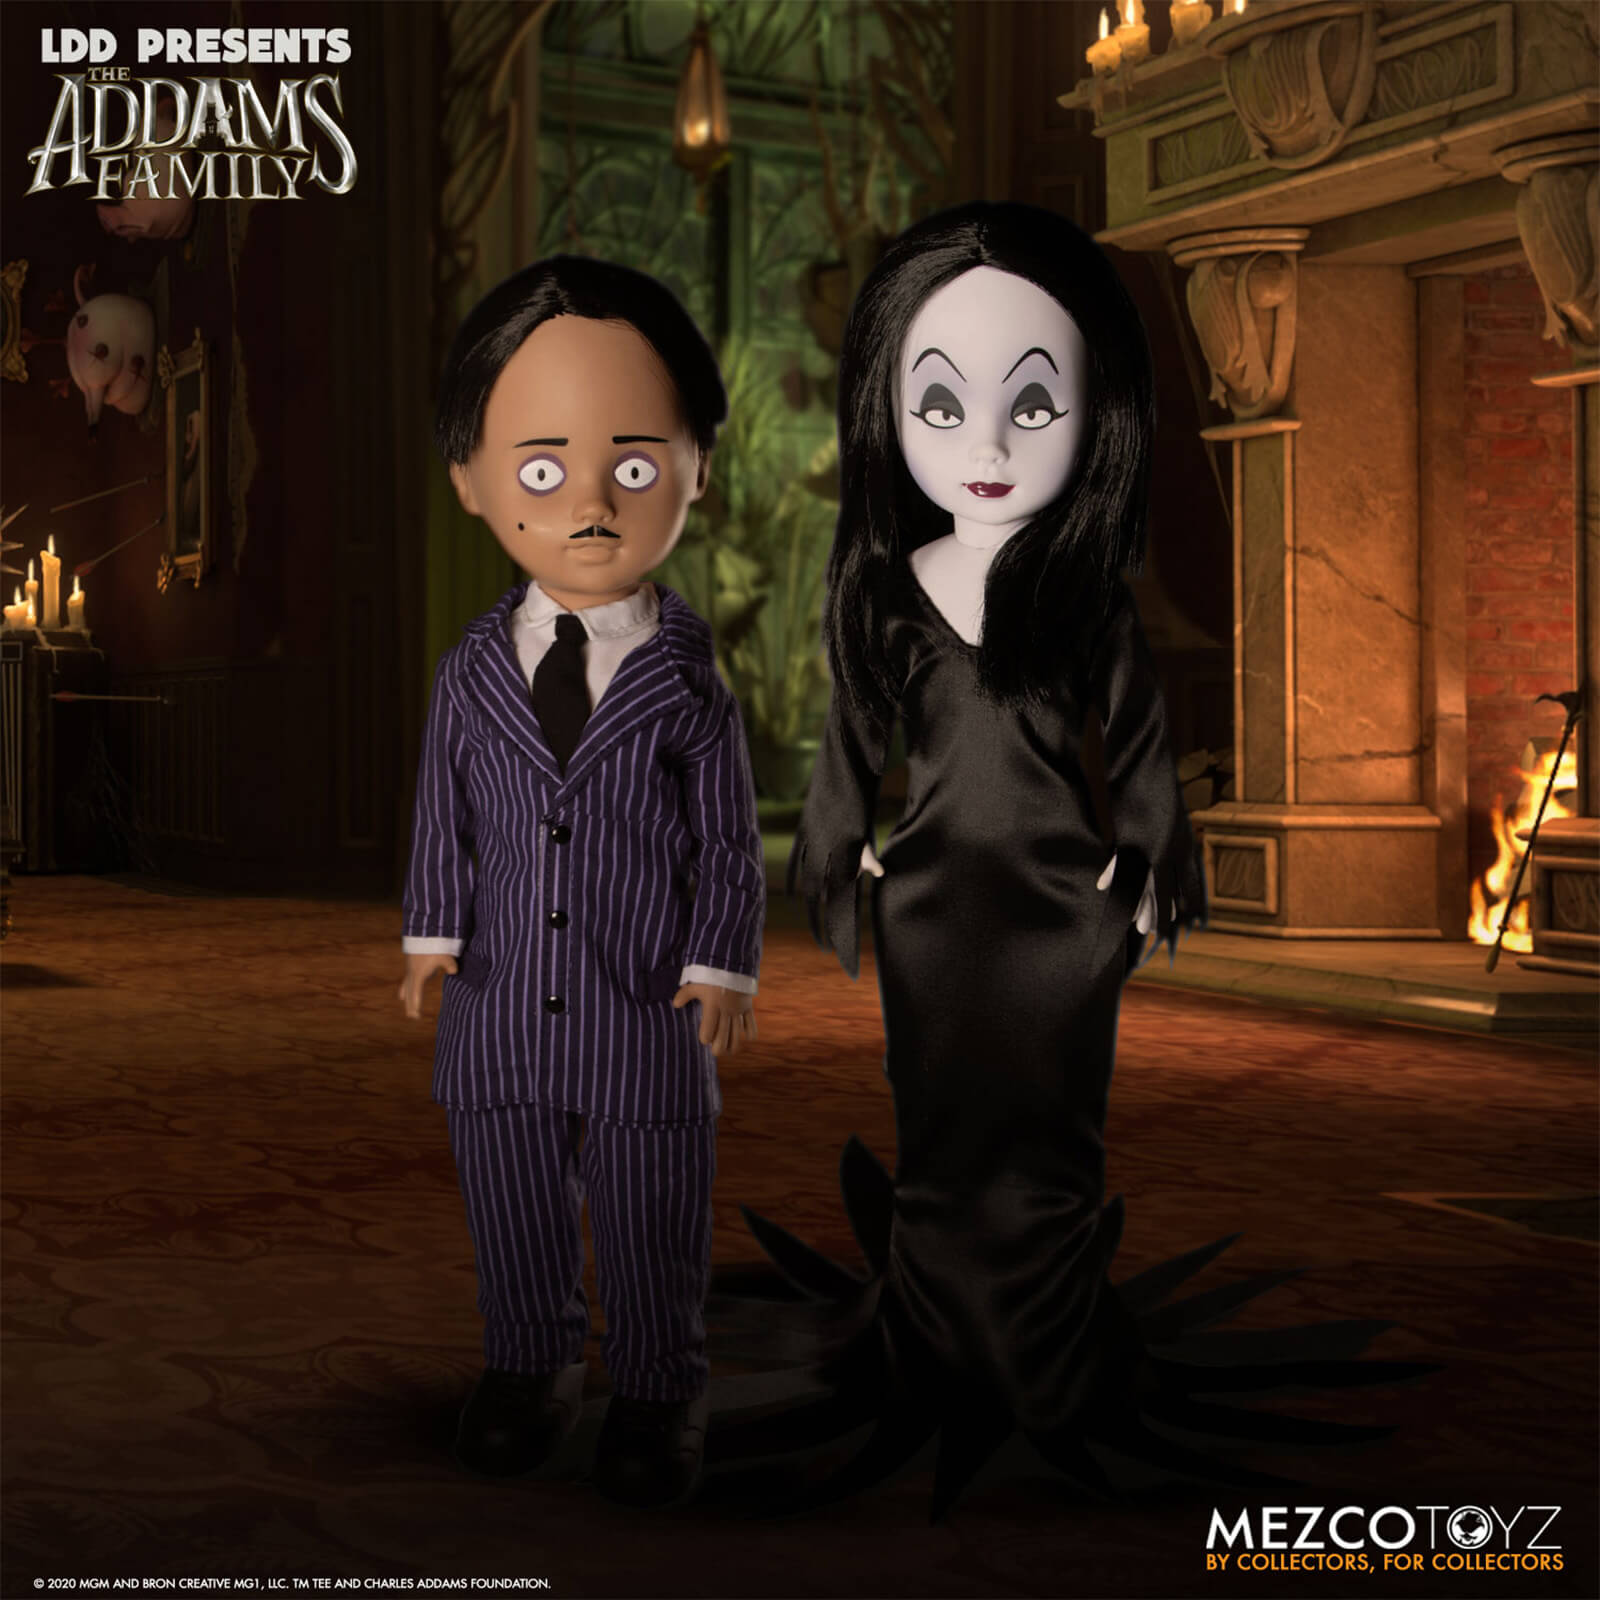 Mezco LDD Presents Addams Family - Pack doble muñecos Gómez y Morticia